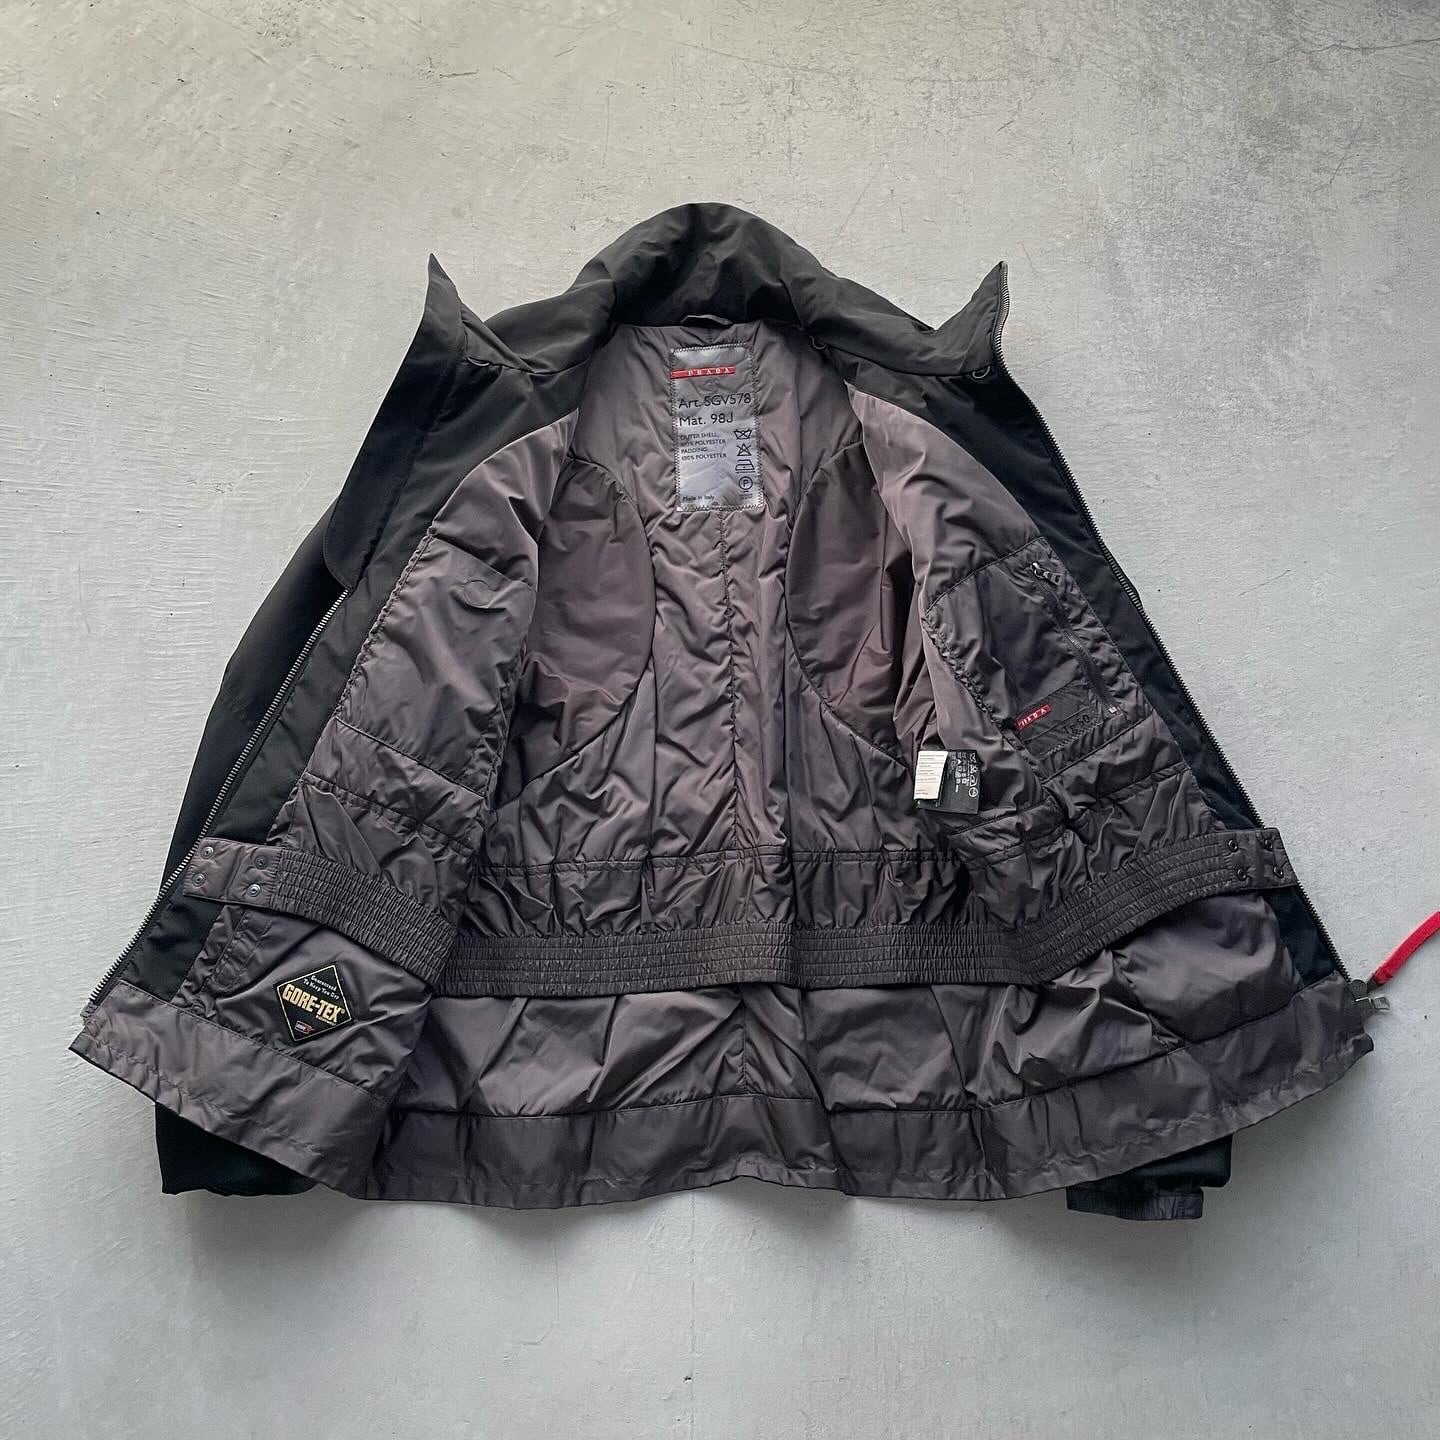 PRADA SPORT/00s archive GORE-TEX gimmick puffer jacket | Seek the ...